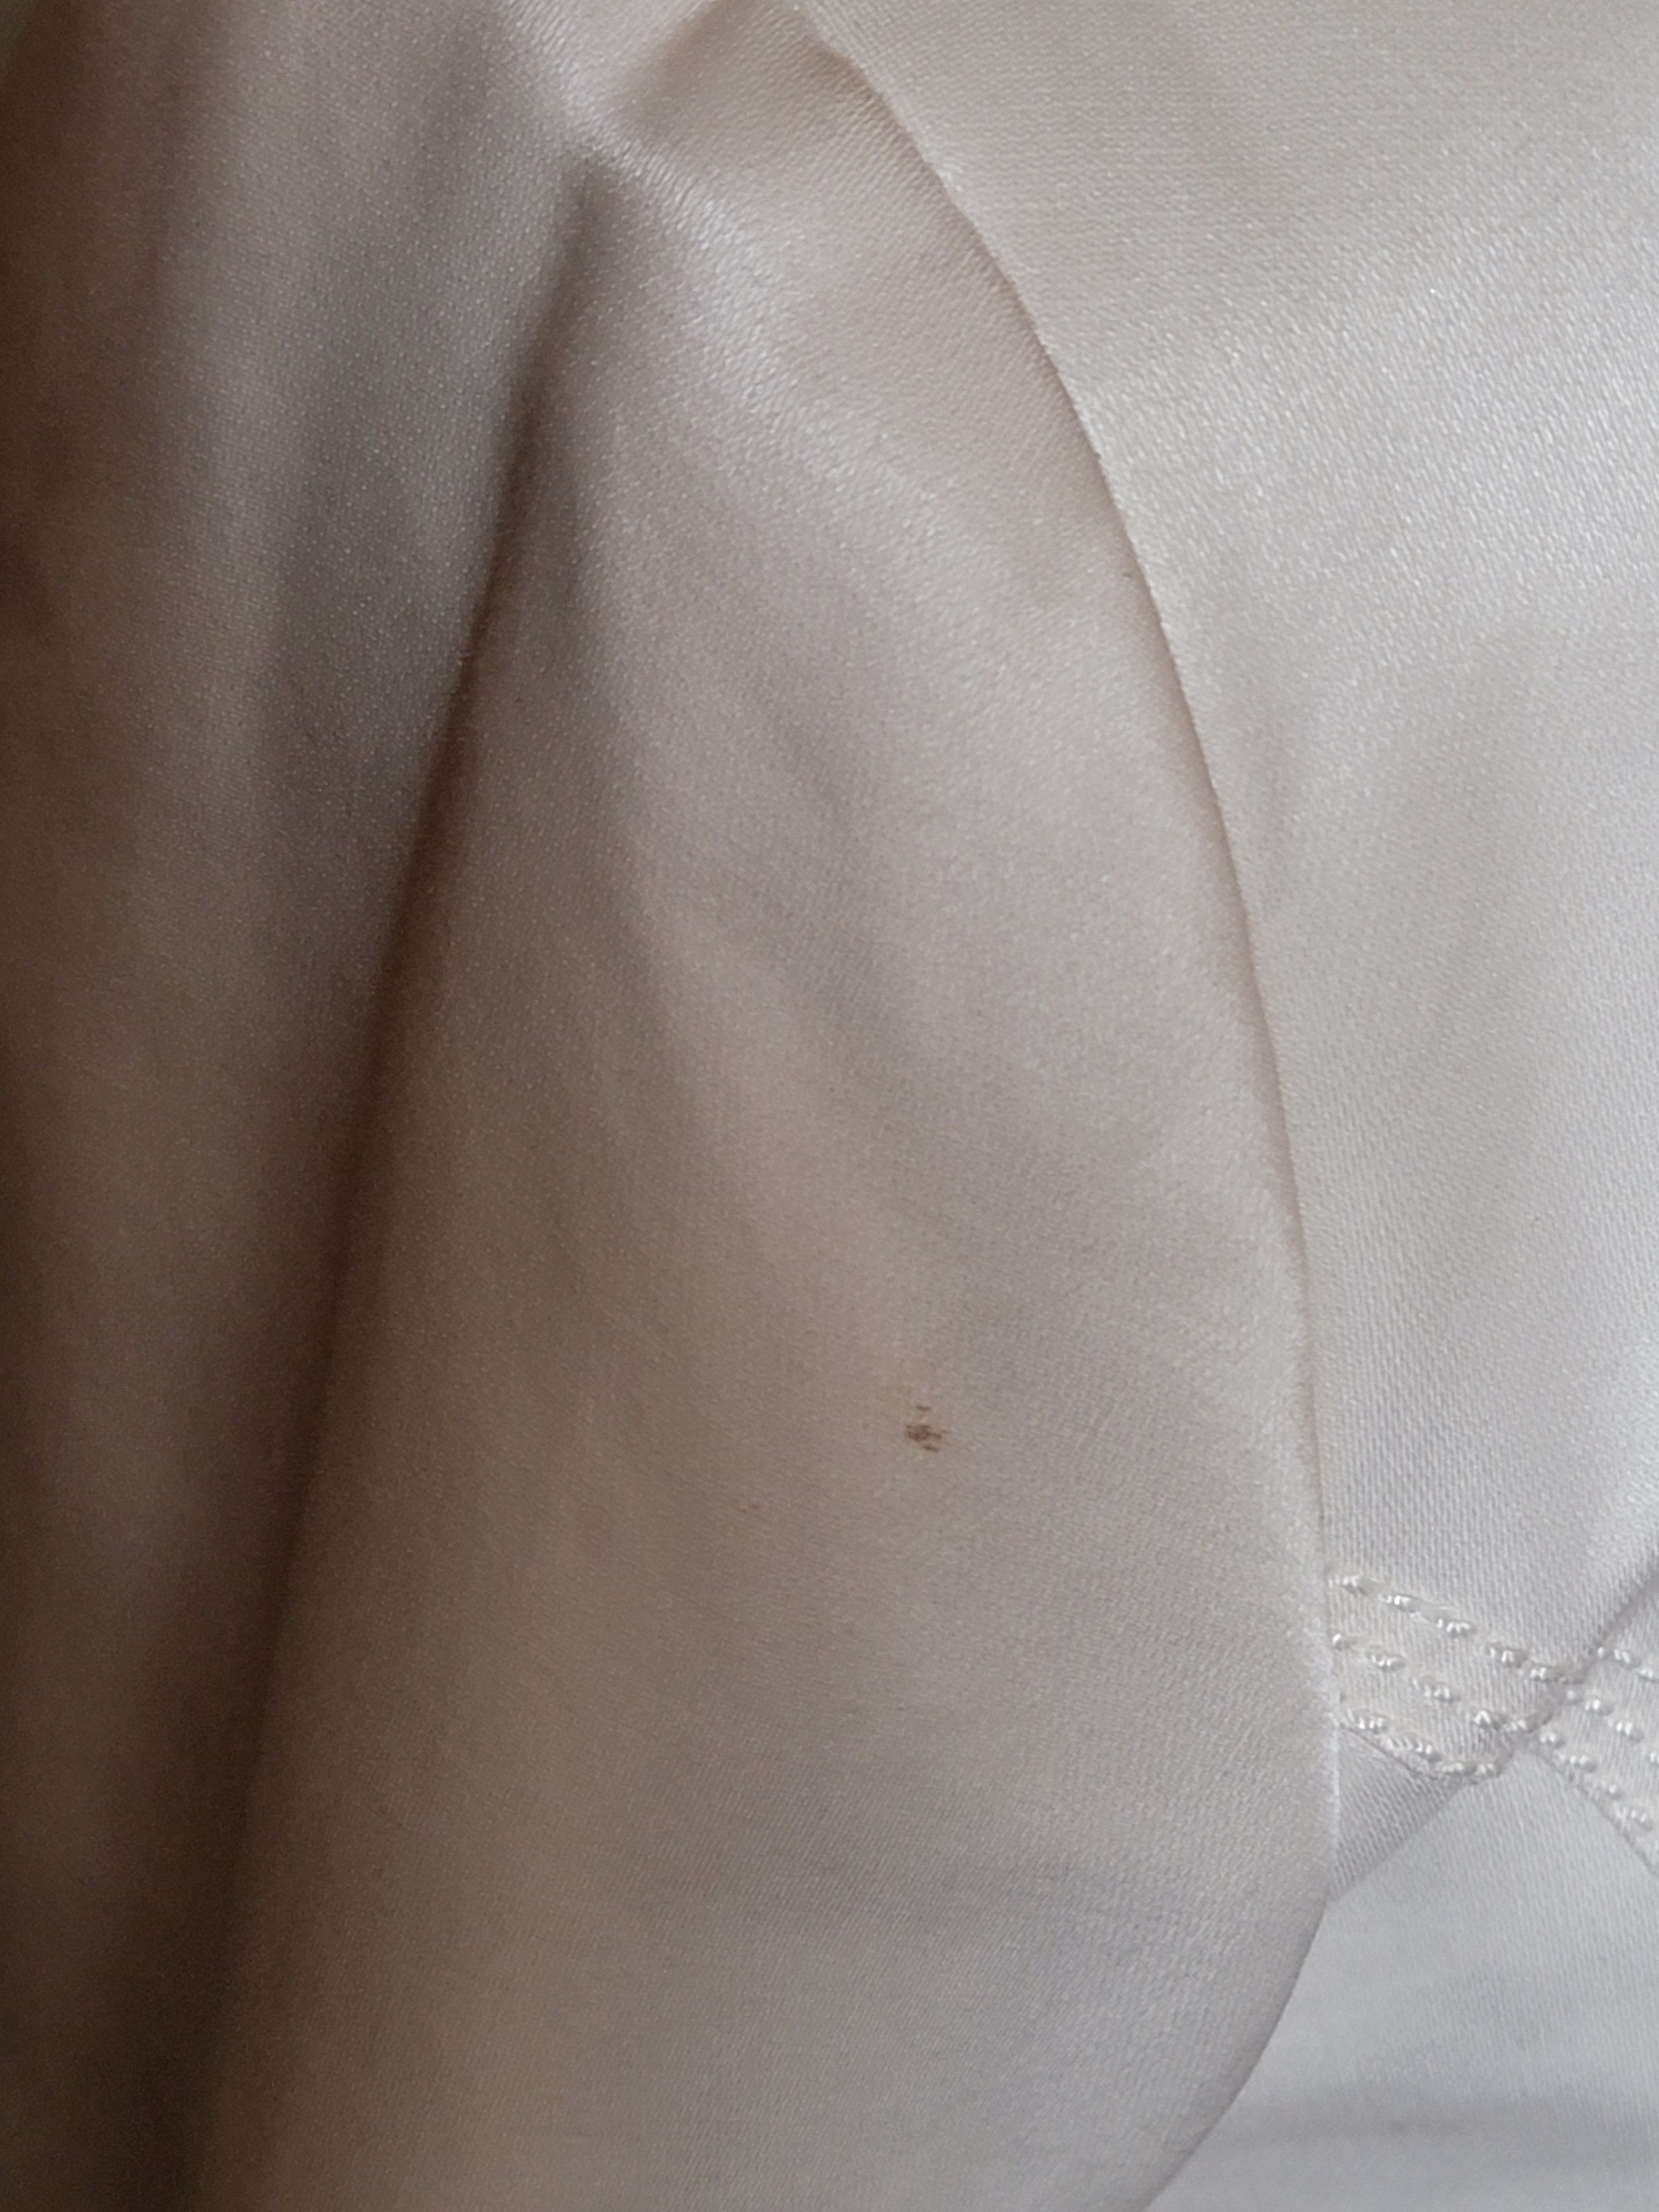 Ann Demeulemeester SS 2011 Ann D white silk cotton blazer size S Size 38R - 4 Thumbnail